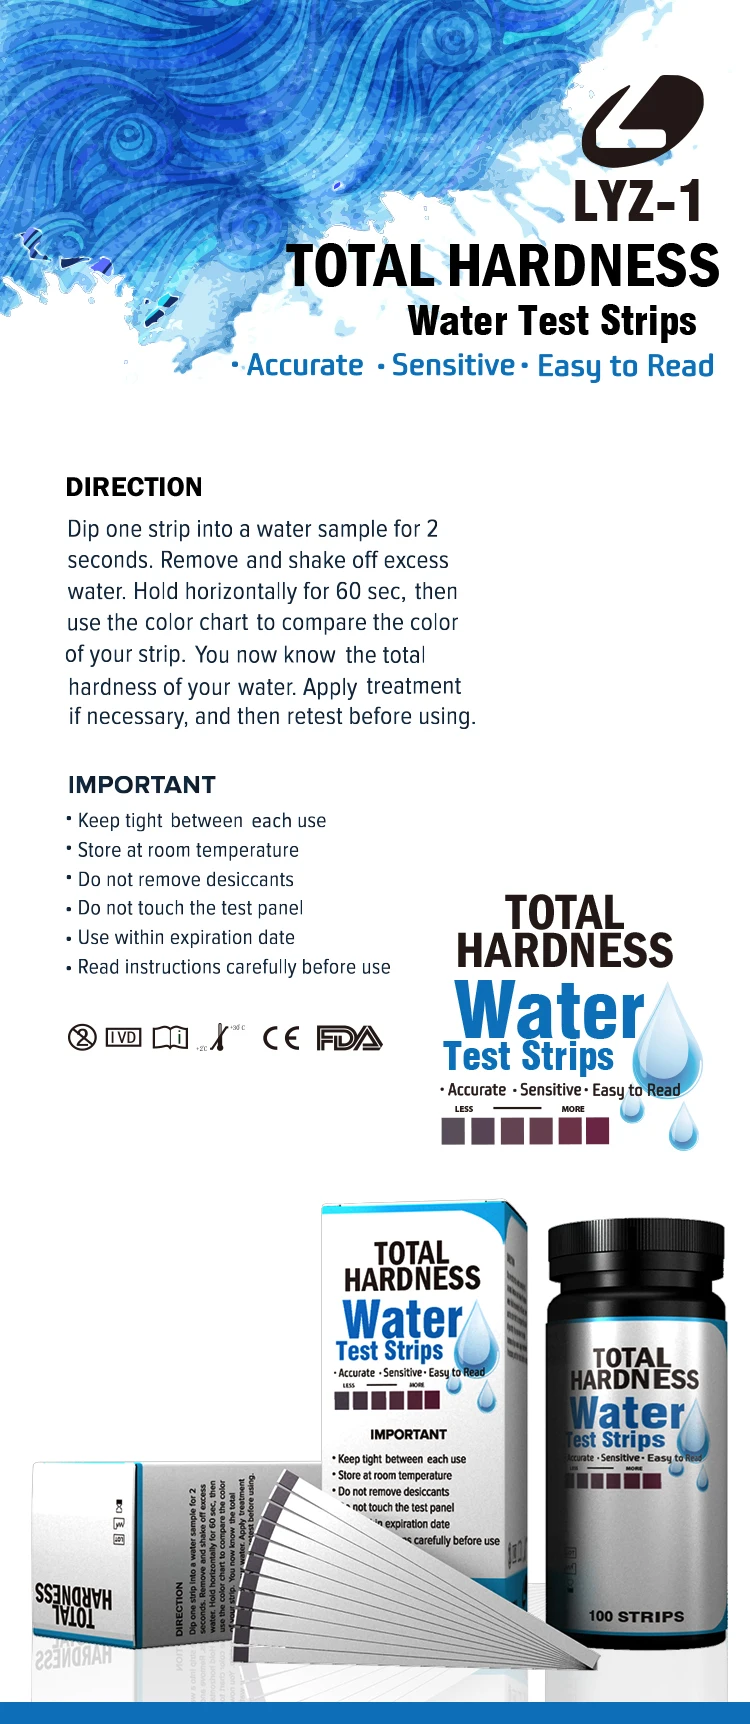 Aqua Chem Test Strips Color Chart